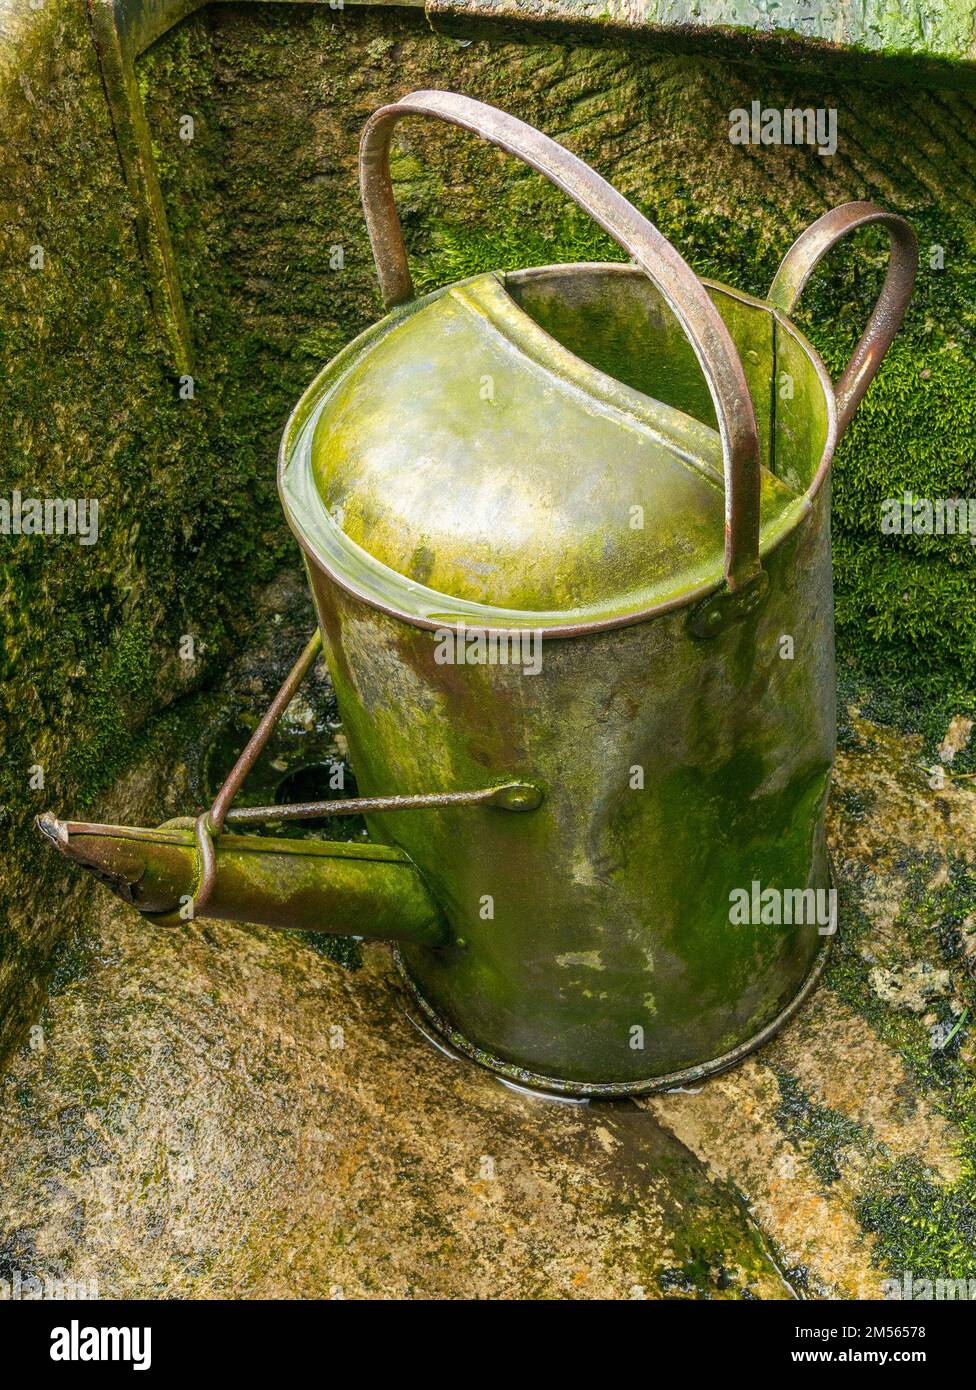 Old damp galvanised metal garden watering can with green algae coating Stock Photo